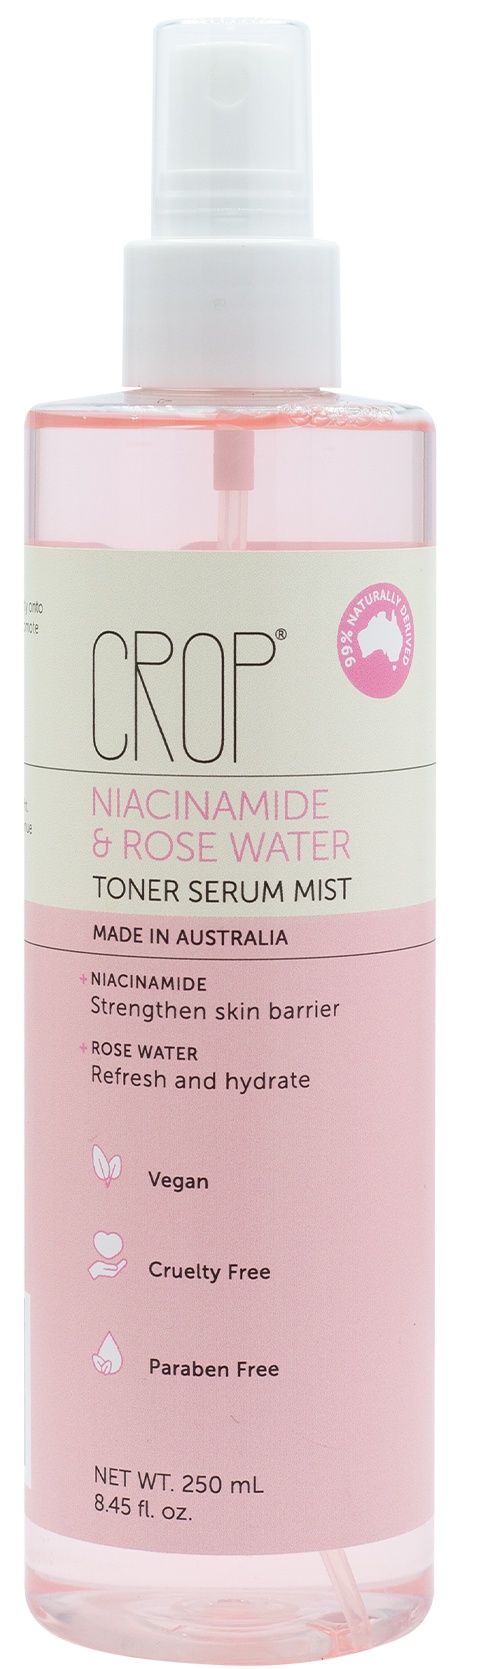 Crop Natural Niacinamide & Rose Water Toner Serum Mist